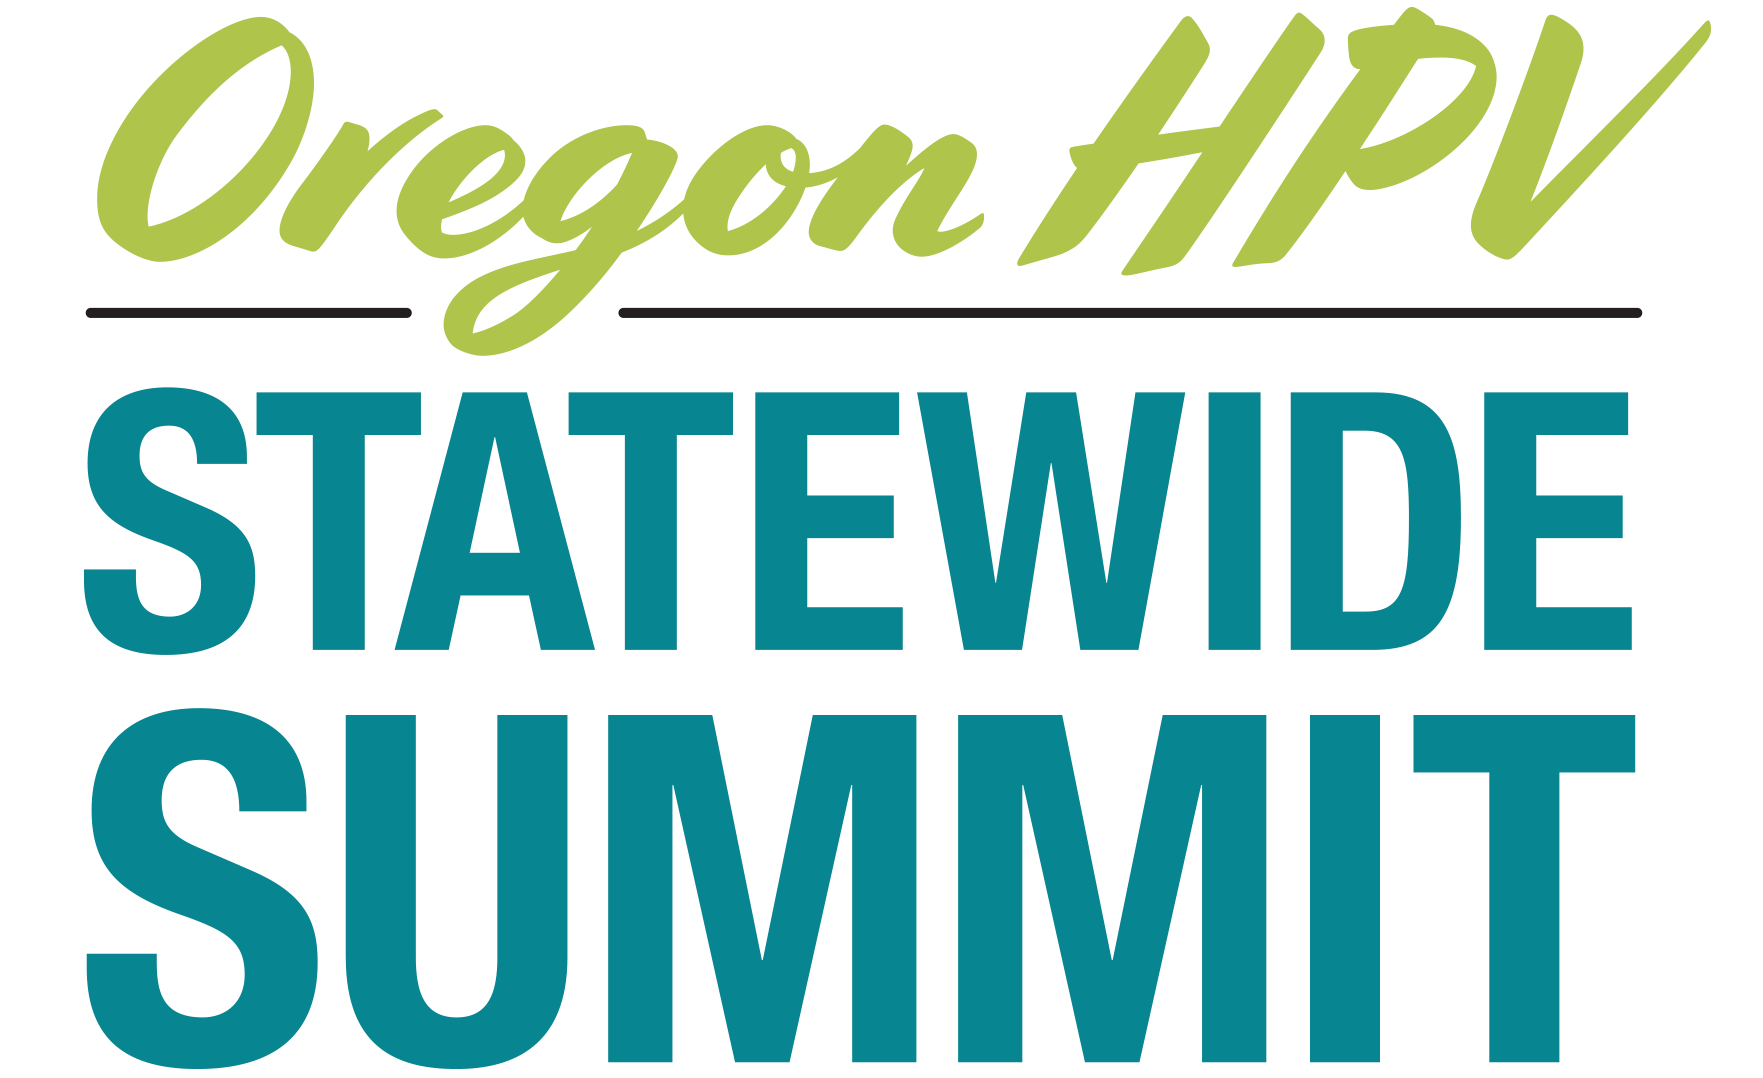 Text: Oregon HPV Statewide Summit